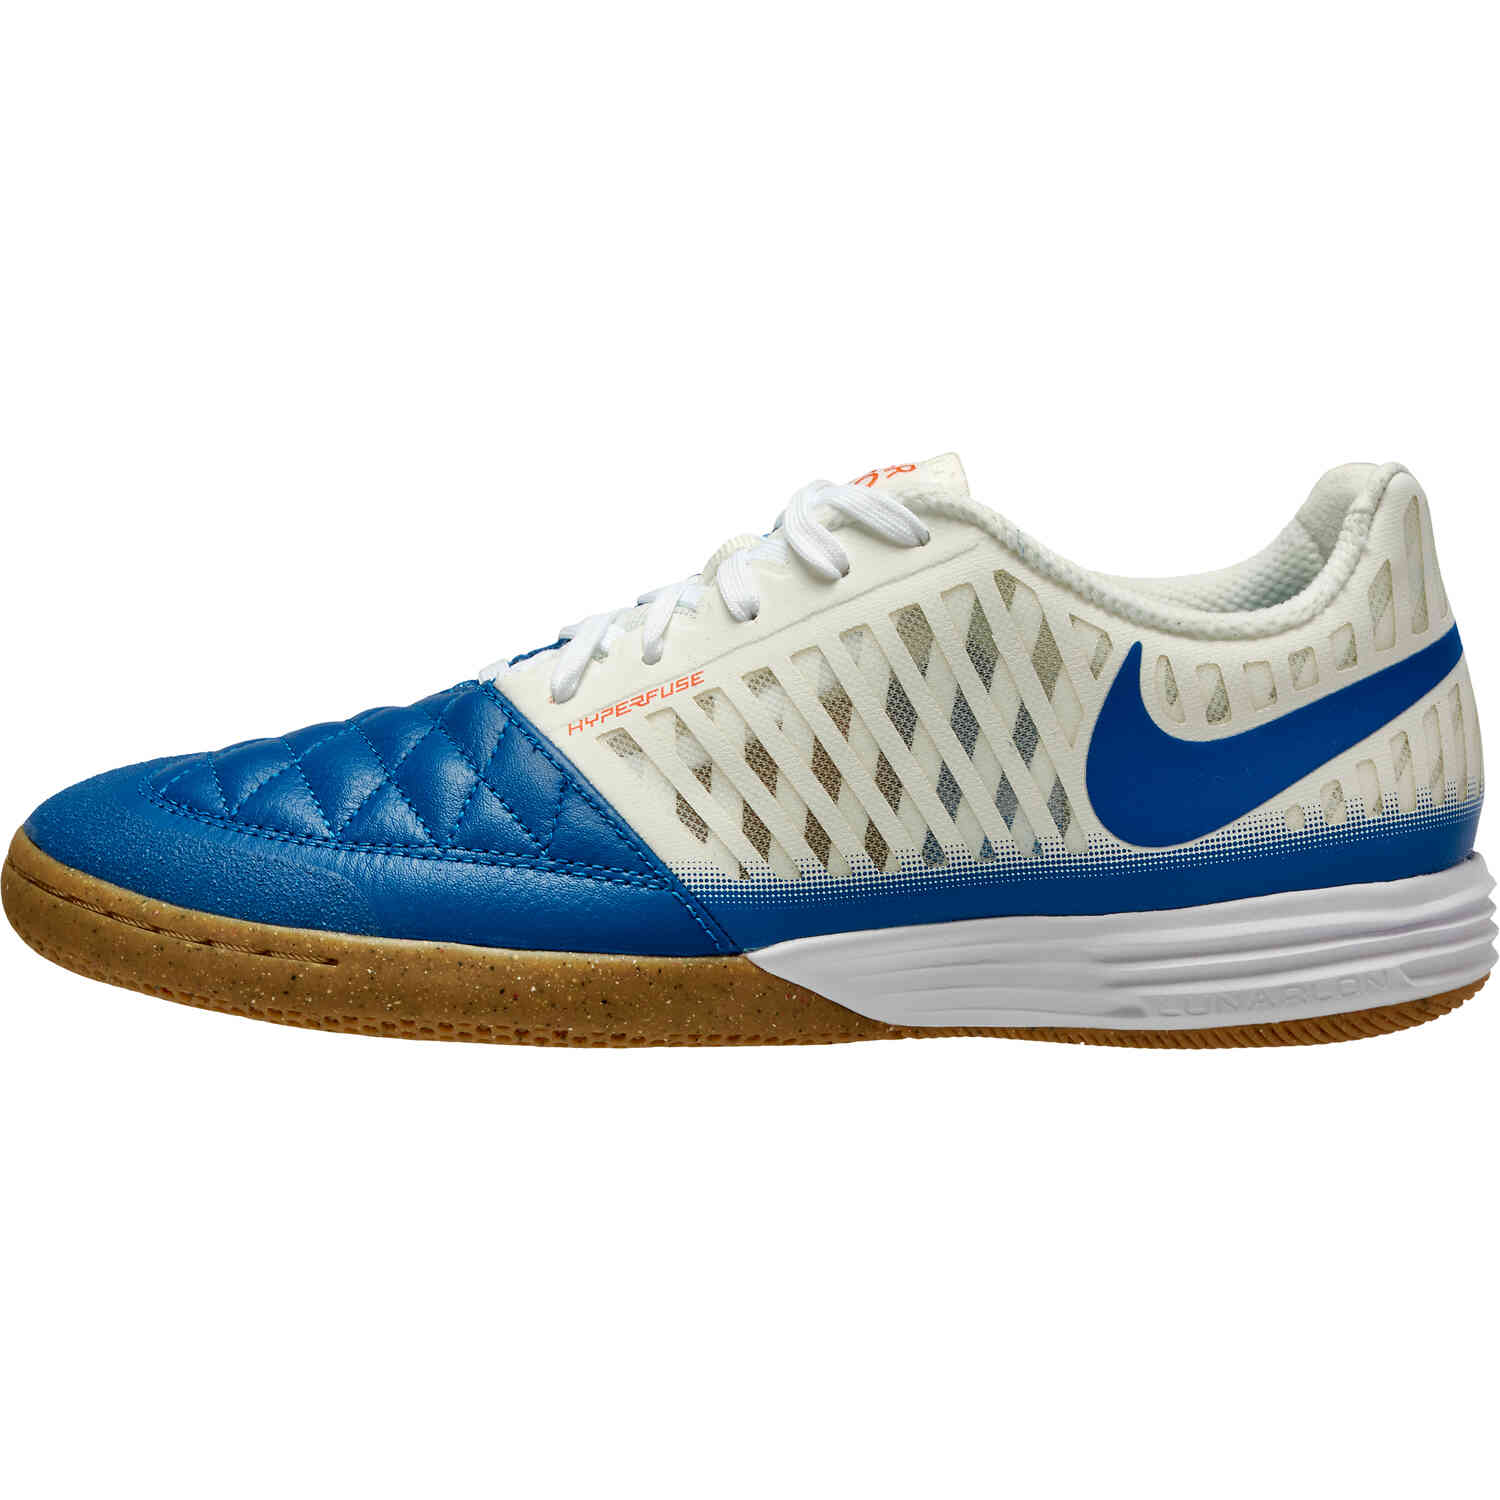 Nike Lunar II IC Indoor Soccer Shoes - Sail, Blue Jay - Soccer